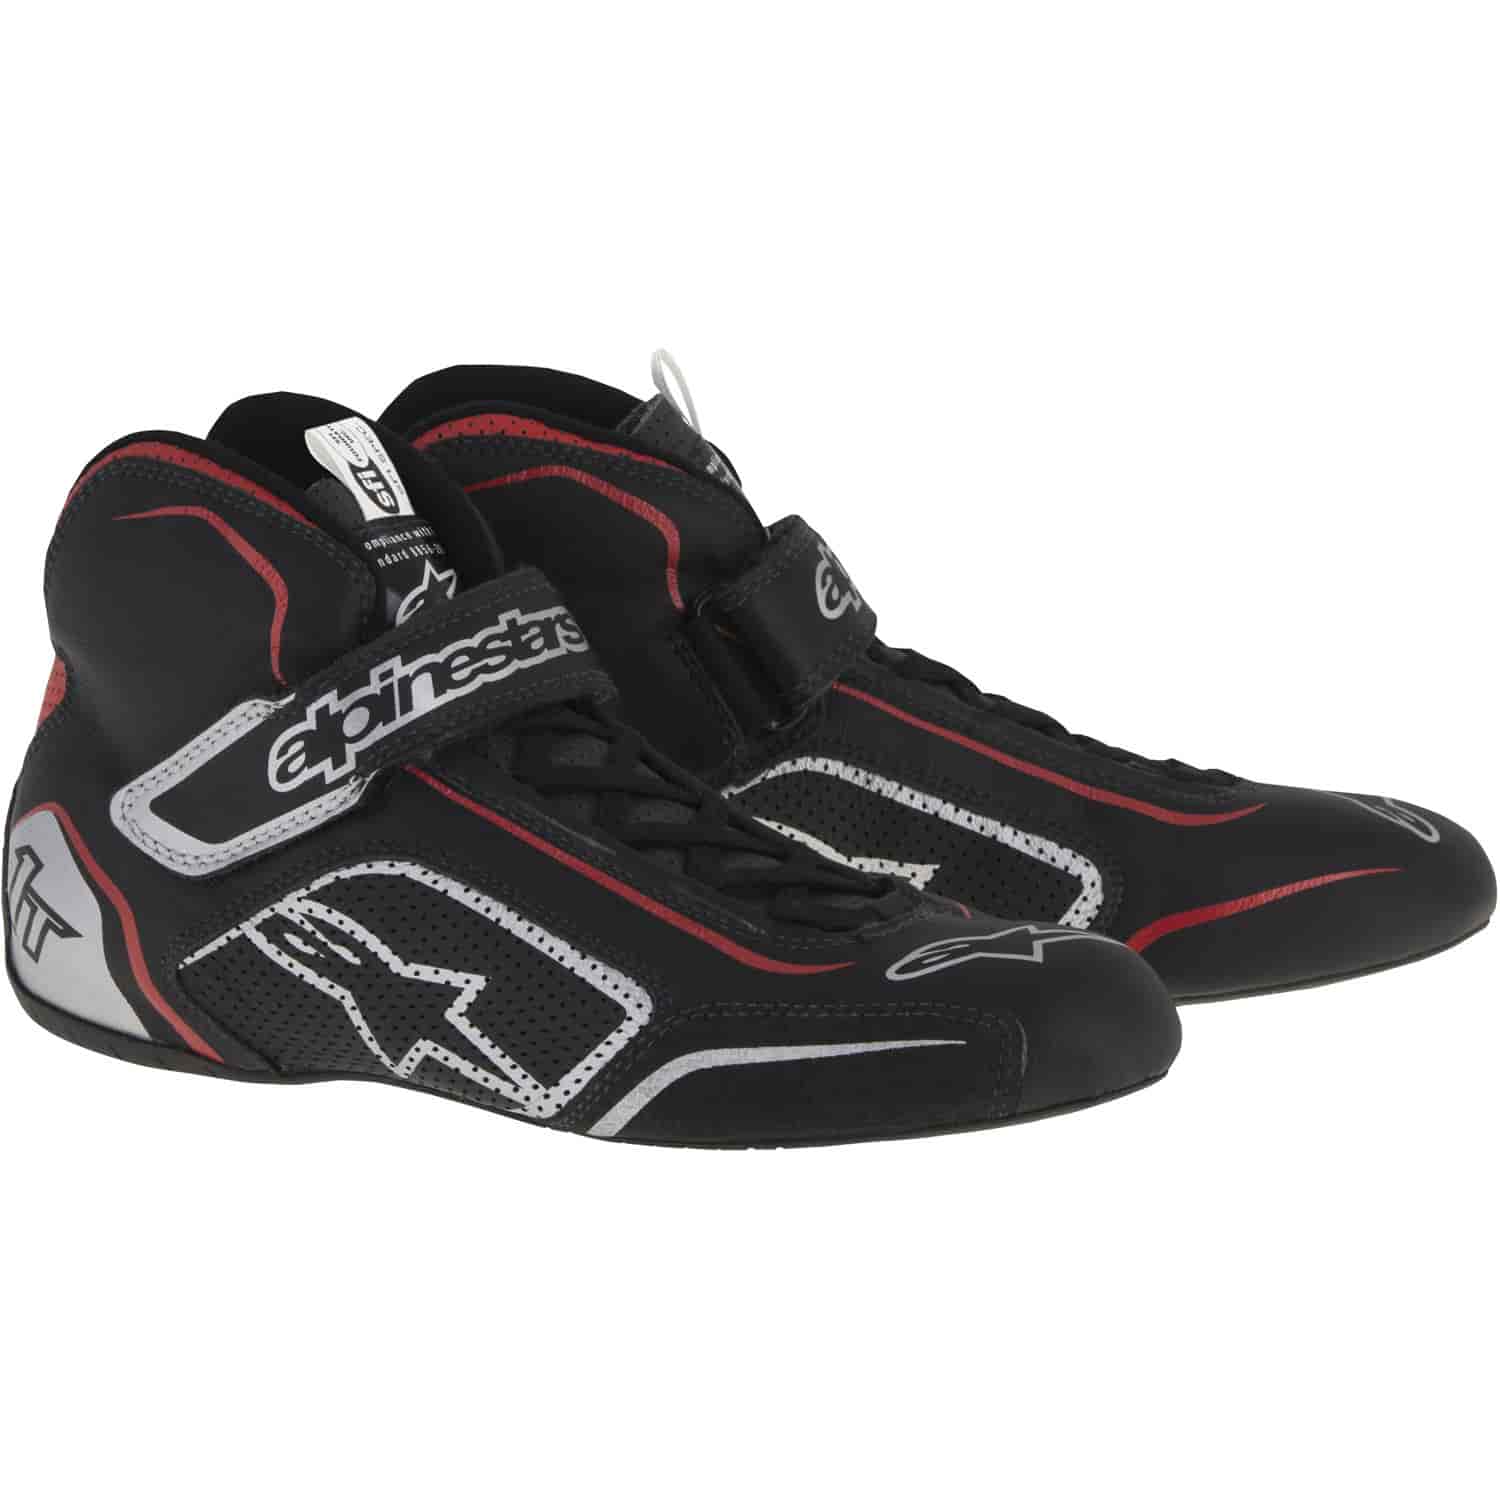 Tech 1-T Shoes Black/Red/Silver SFI 3.3/5